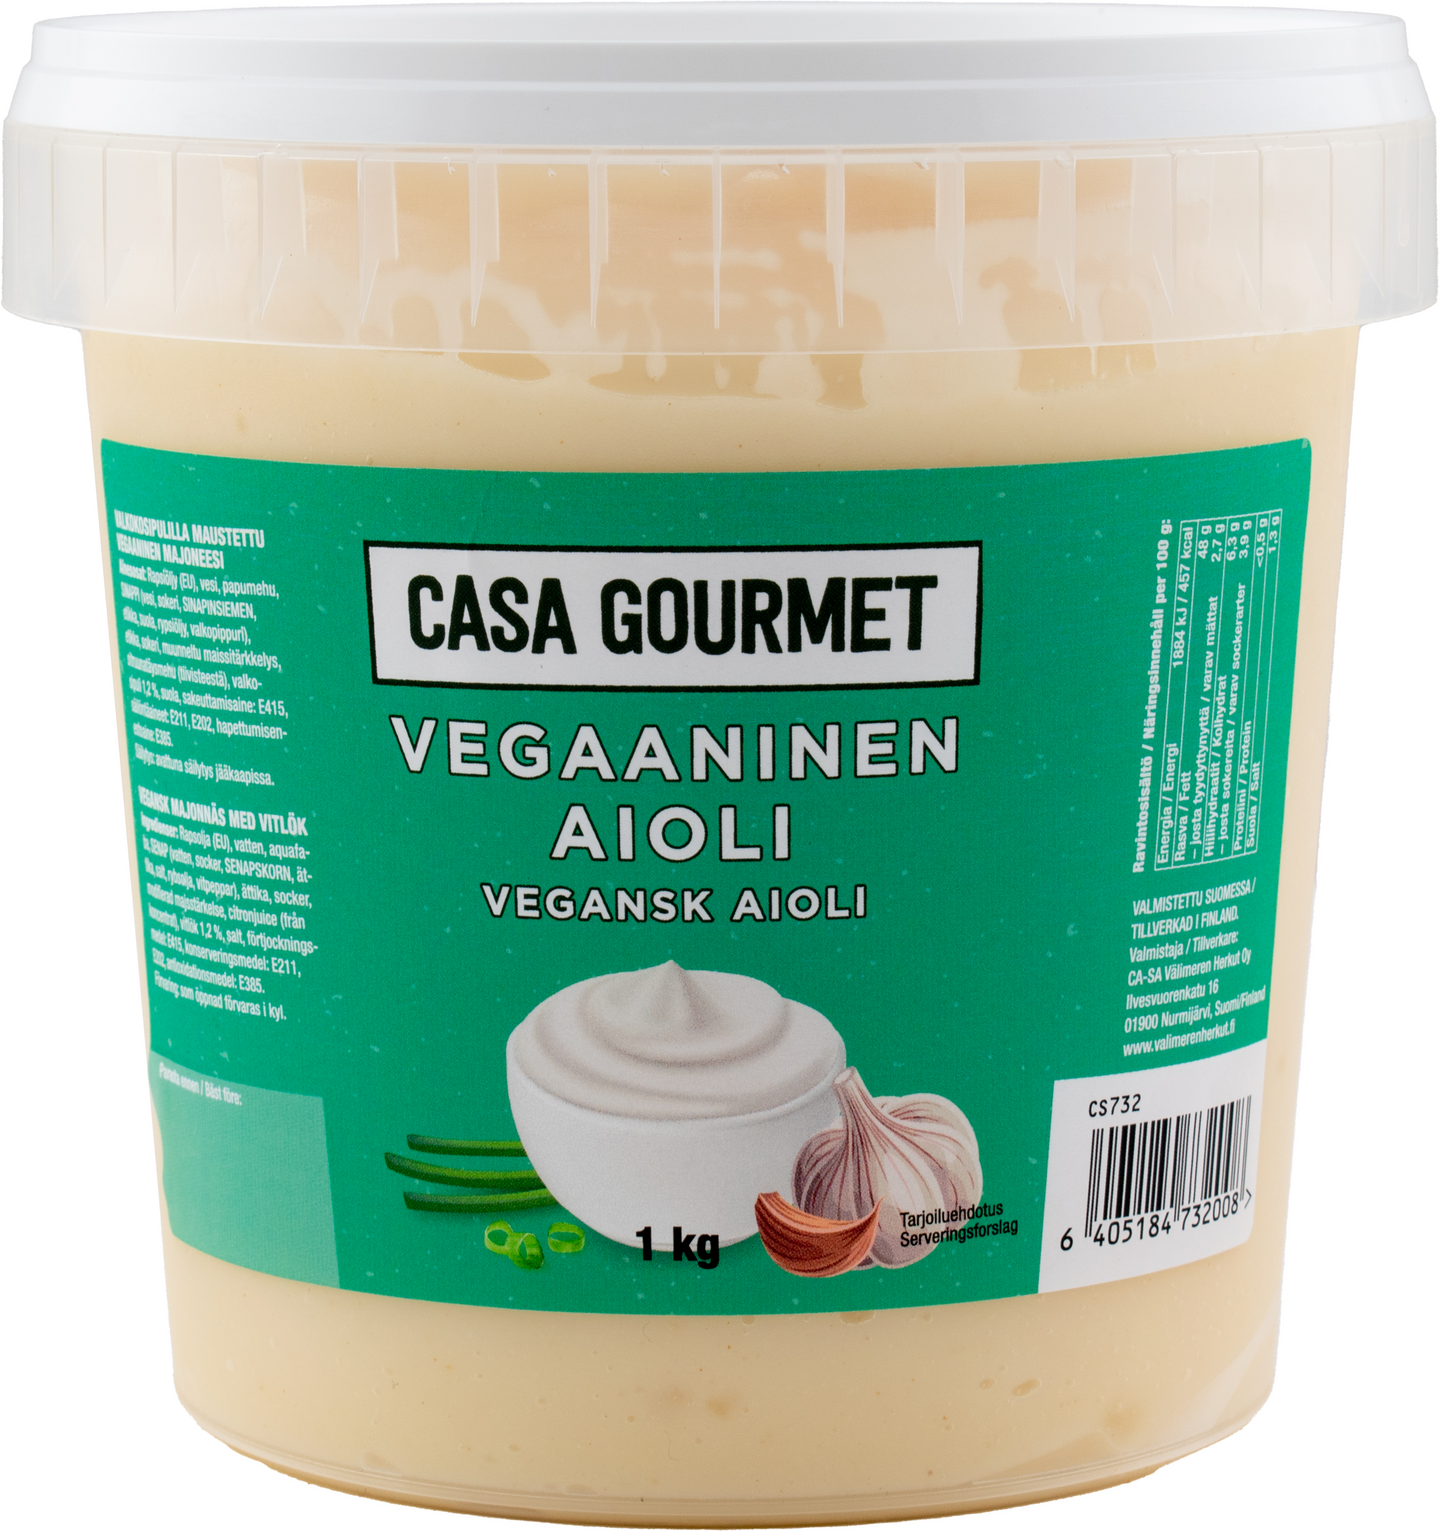 Casa Gourmet vegaaninen aioli 1kg